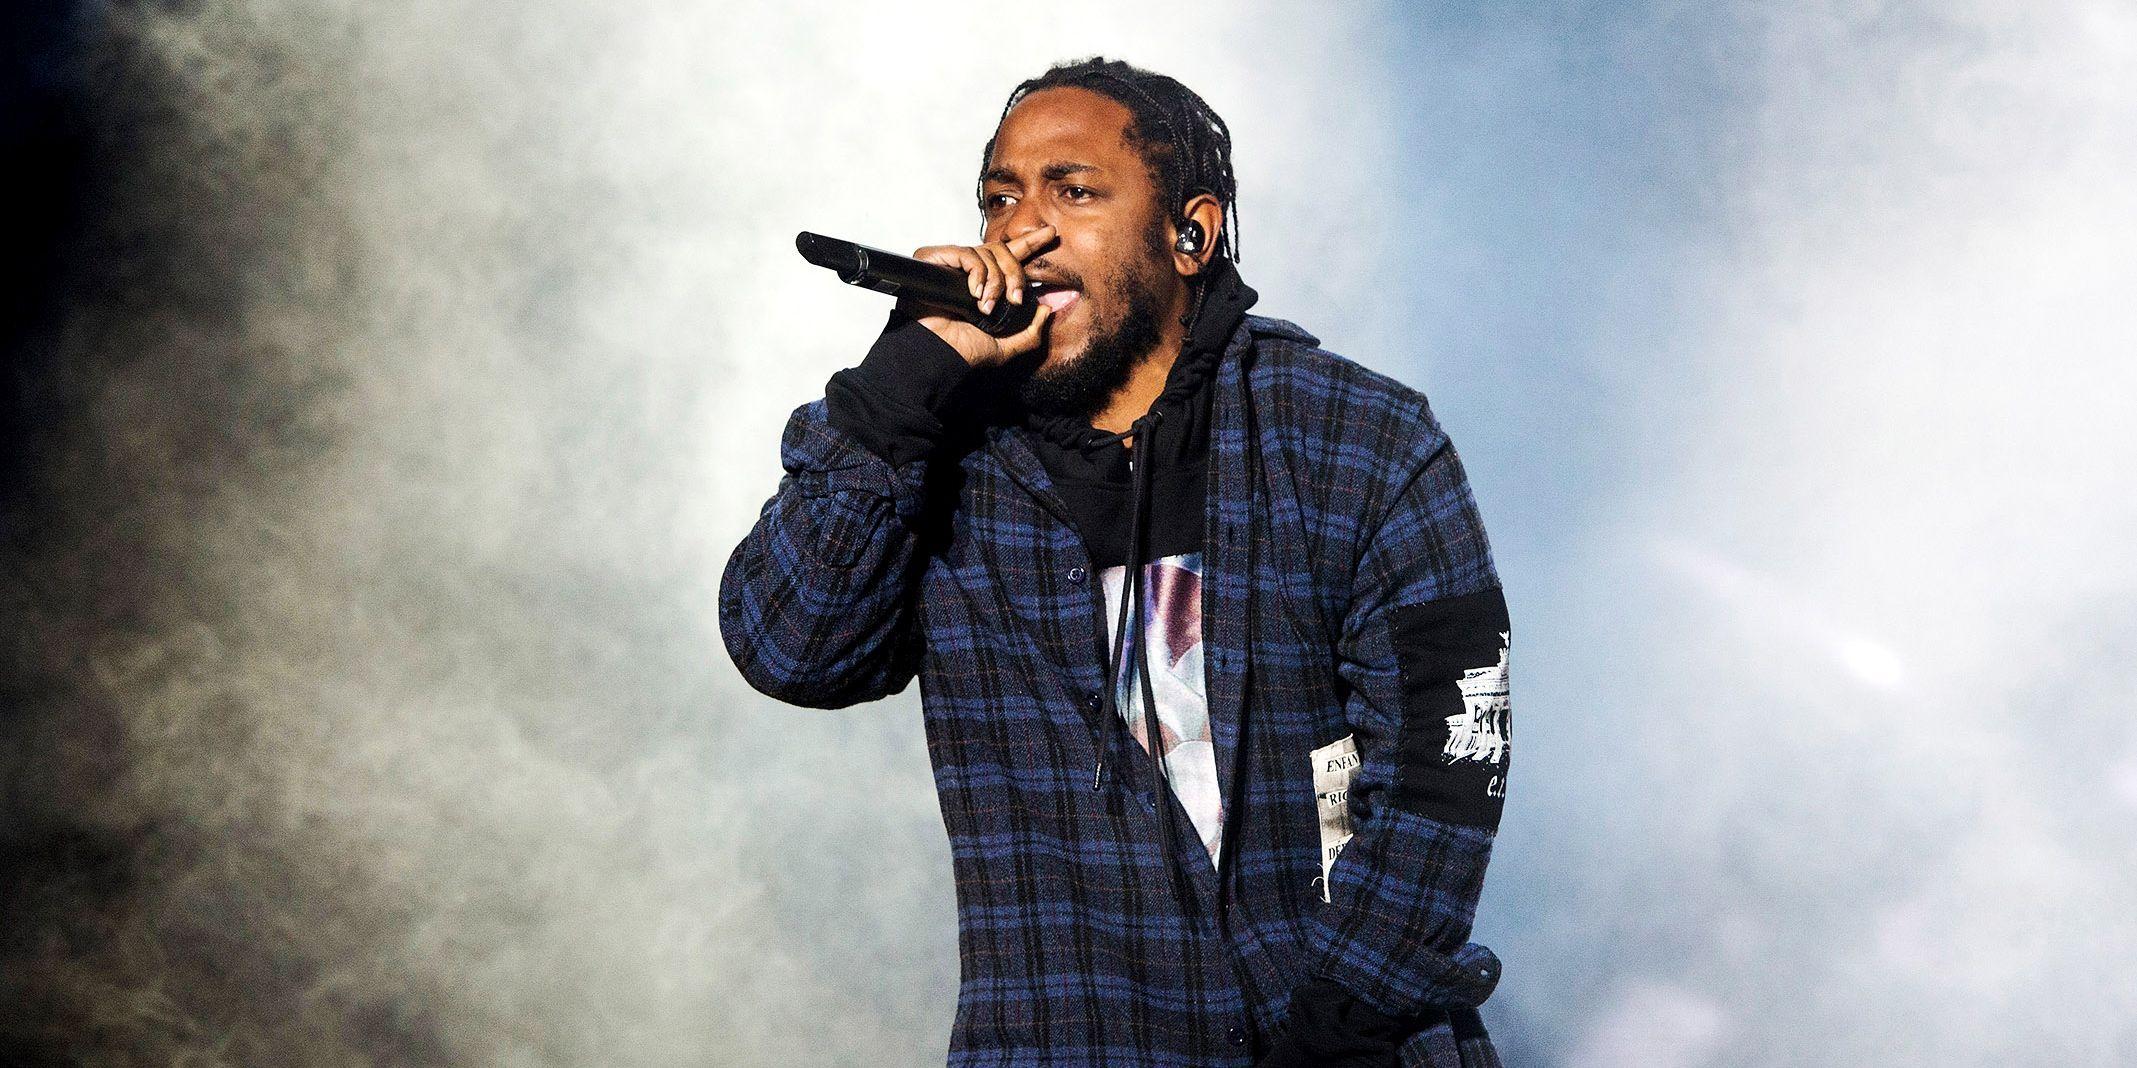 Kendrick Lamar Wallpaper and Background Imagex1068